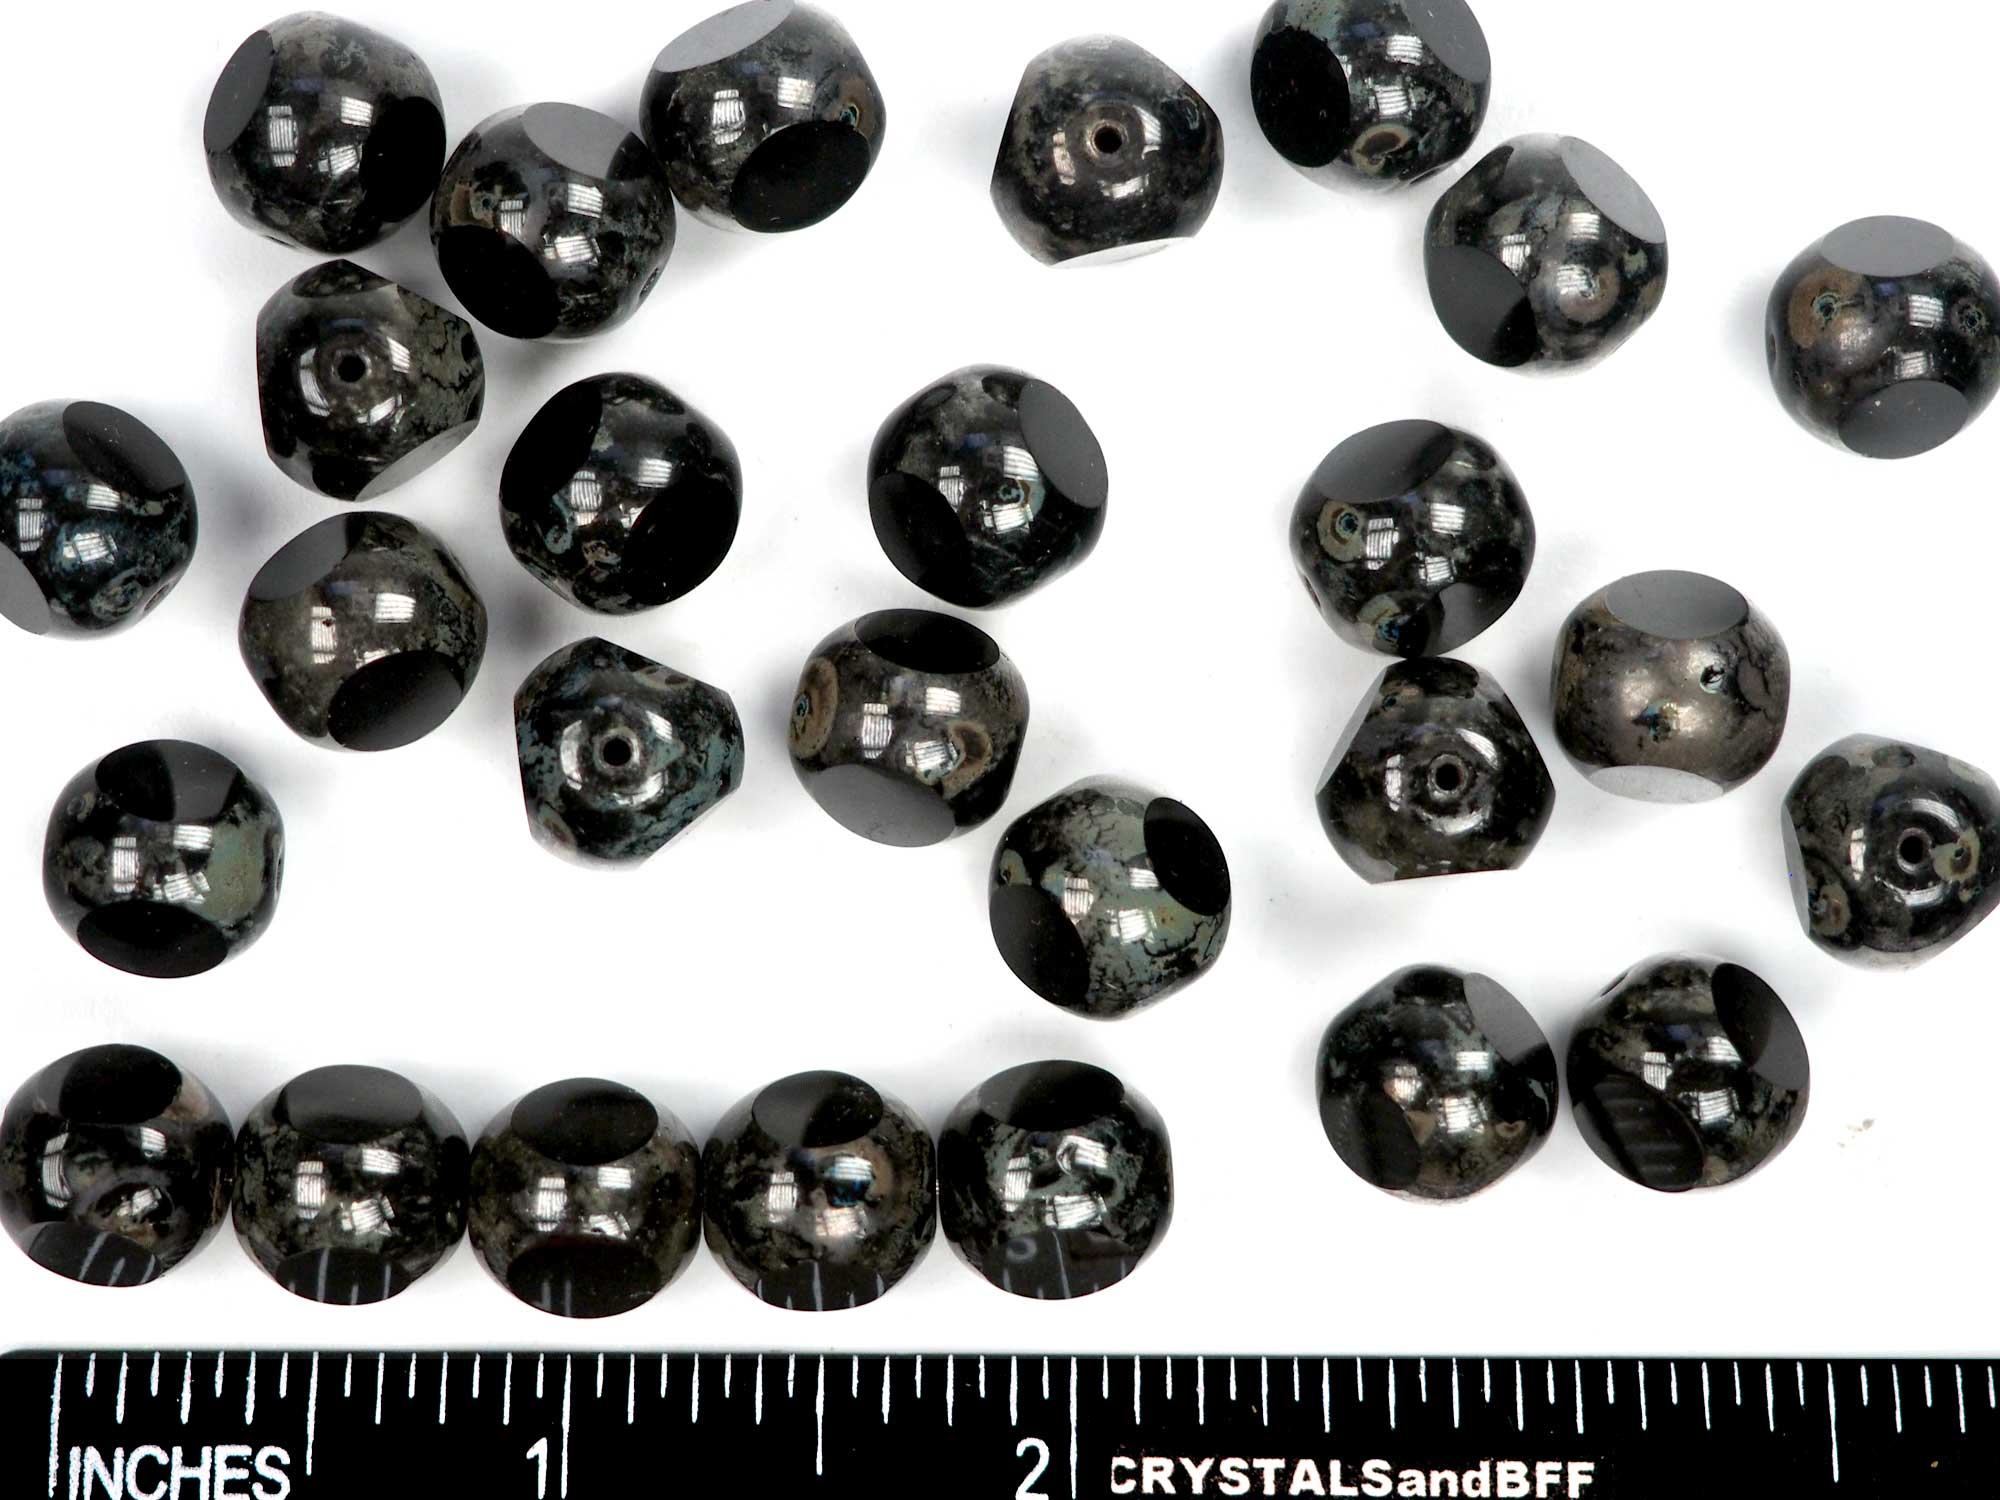 Czech glass skull beads 8pc matte black gold decor 12mm – Orange Grove Beads